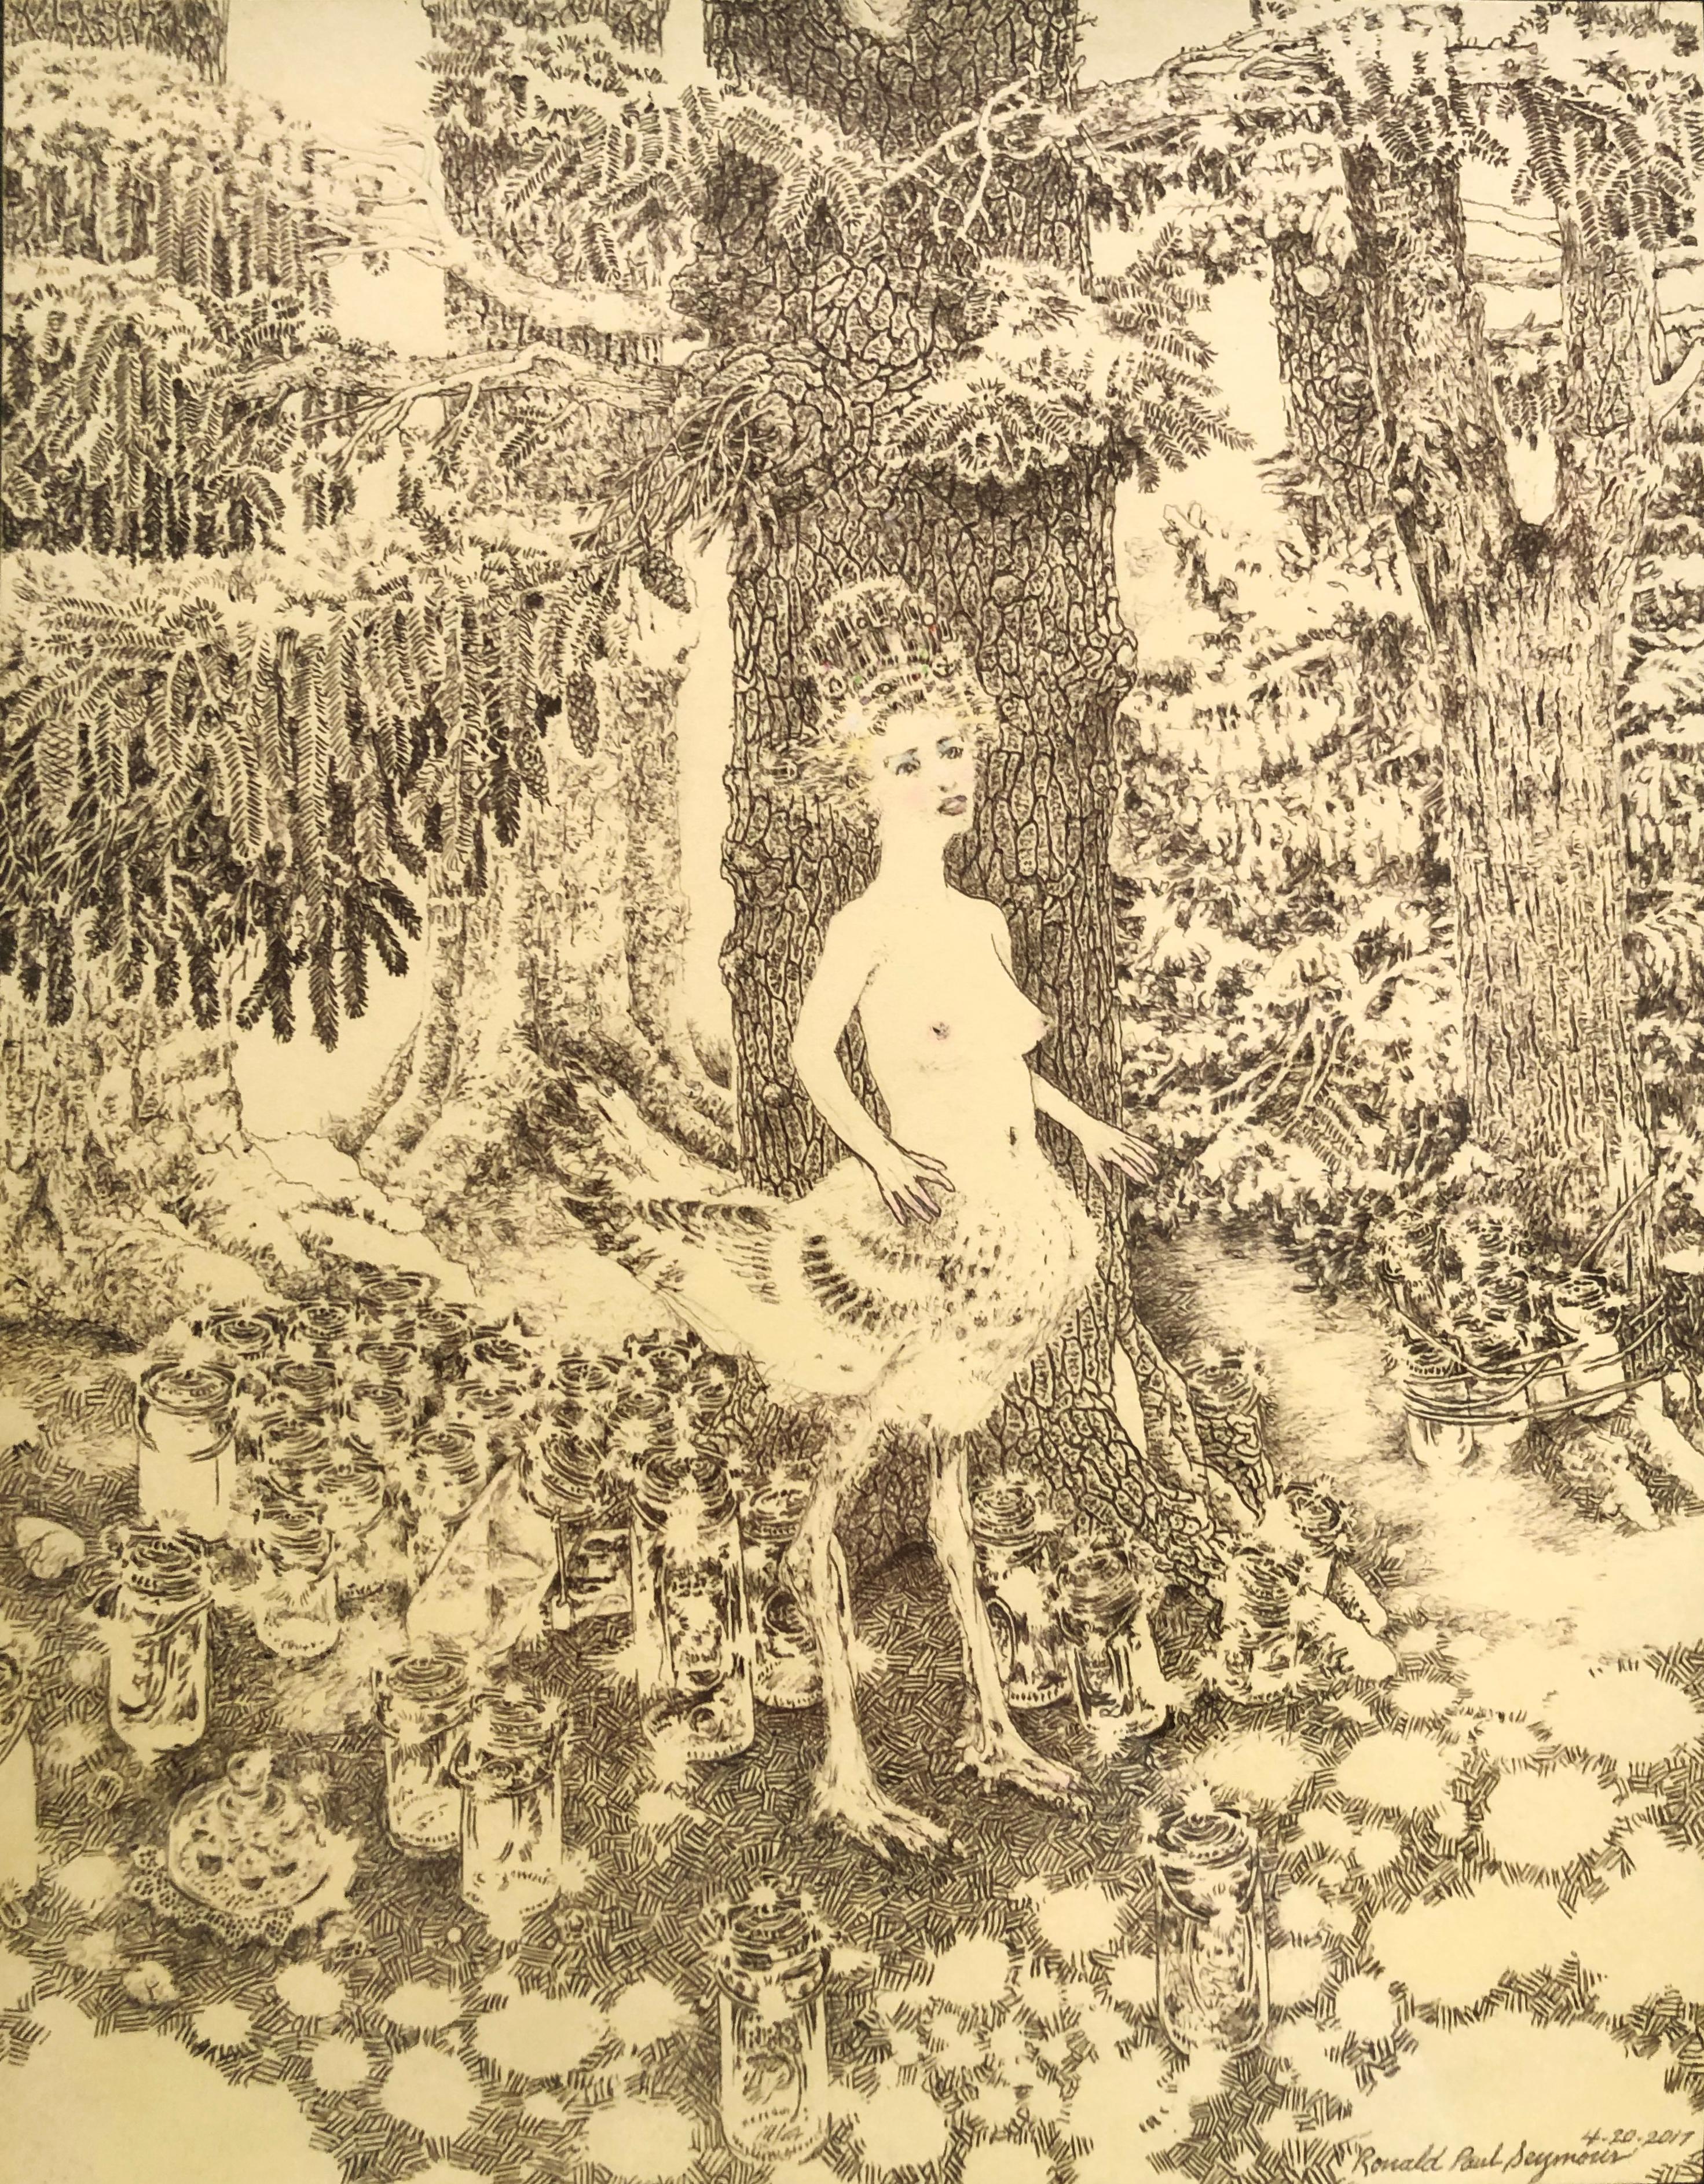 Ronald Seymour Figurative Art - Ballpoint on paper drawing, "Bird Girl Somewhere Deep in the Woods"